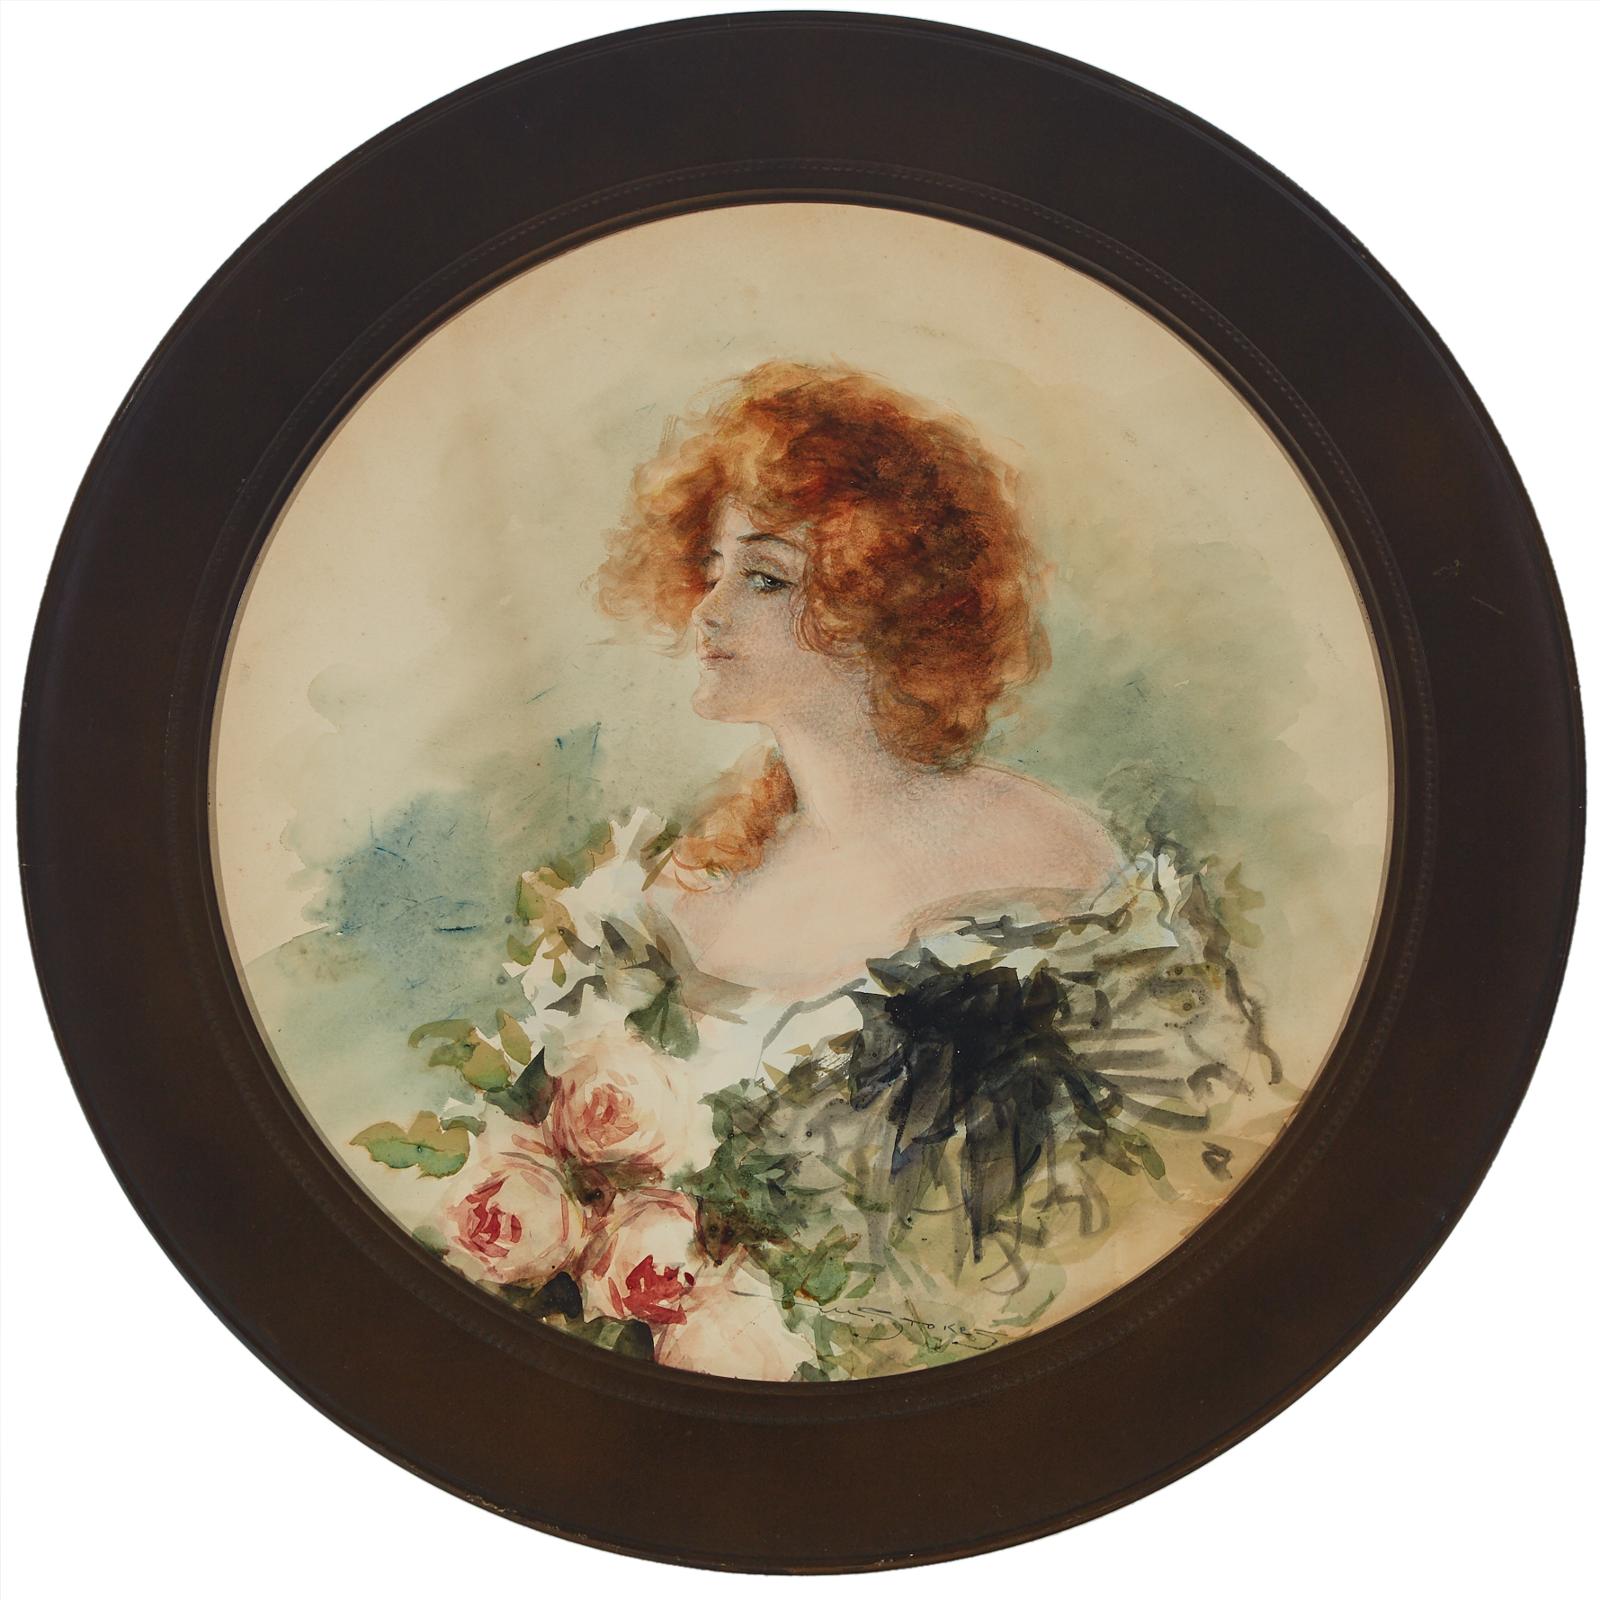 Marianne (Preindlsberger) Stokes (1855-1927) - A Profile Looking Left With Roses; A Profile Looking Right With Roses